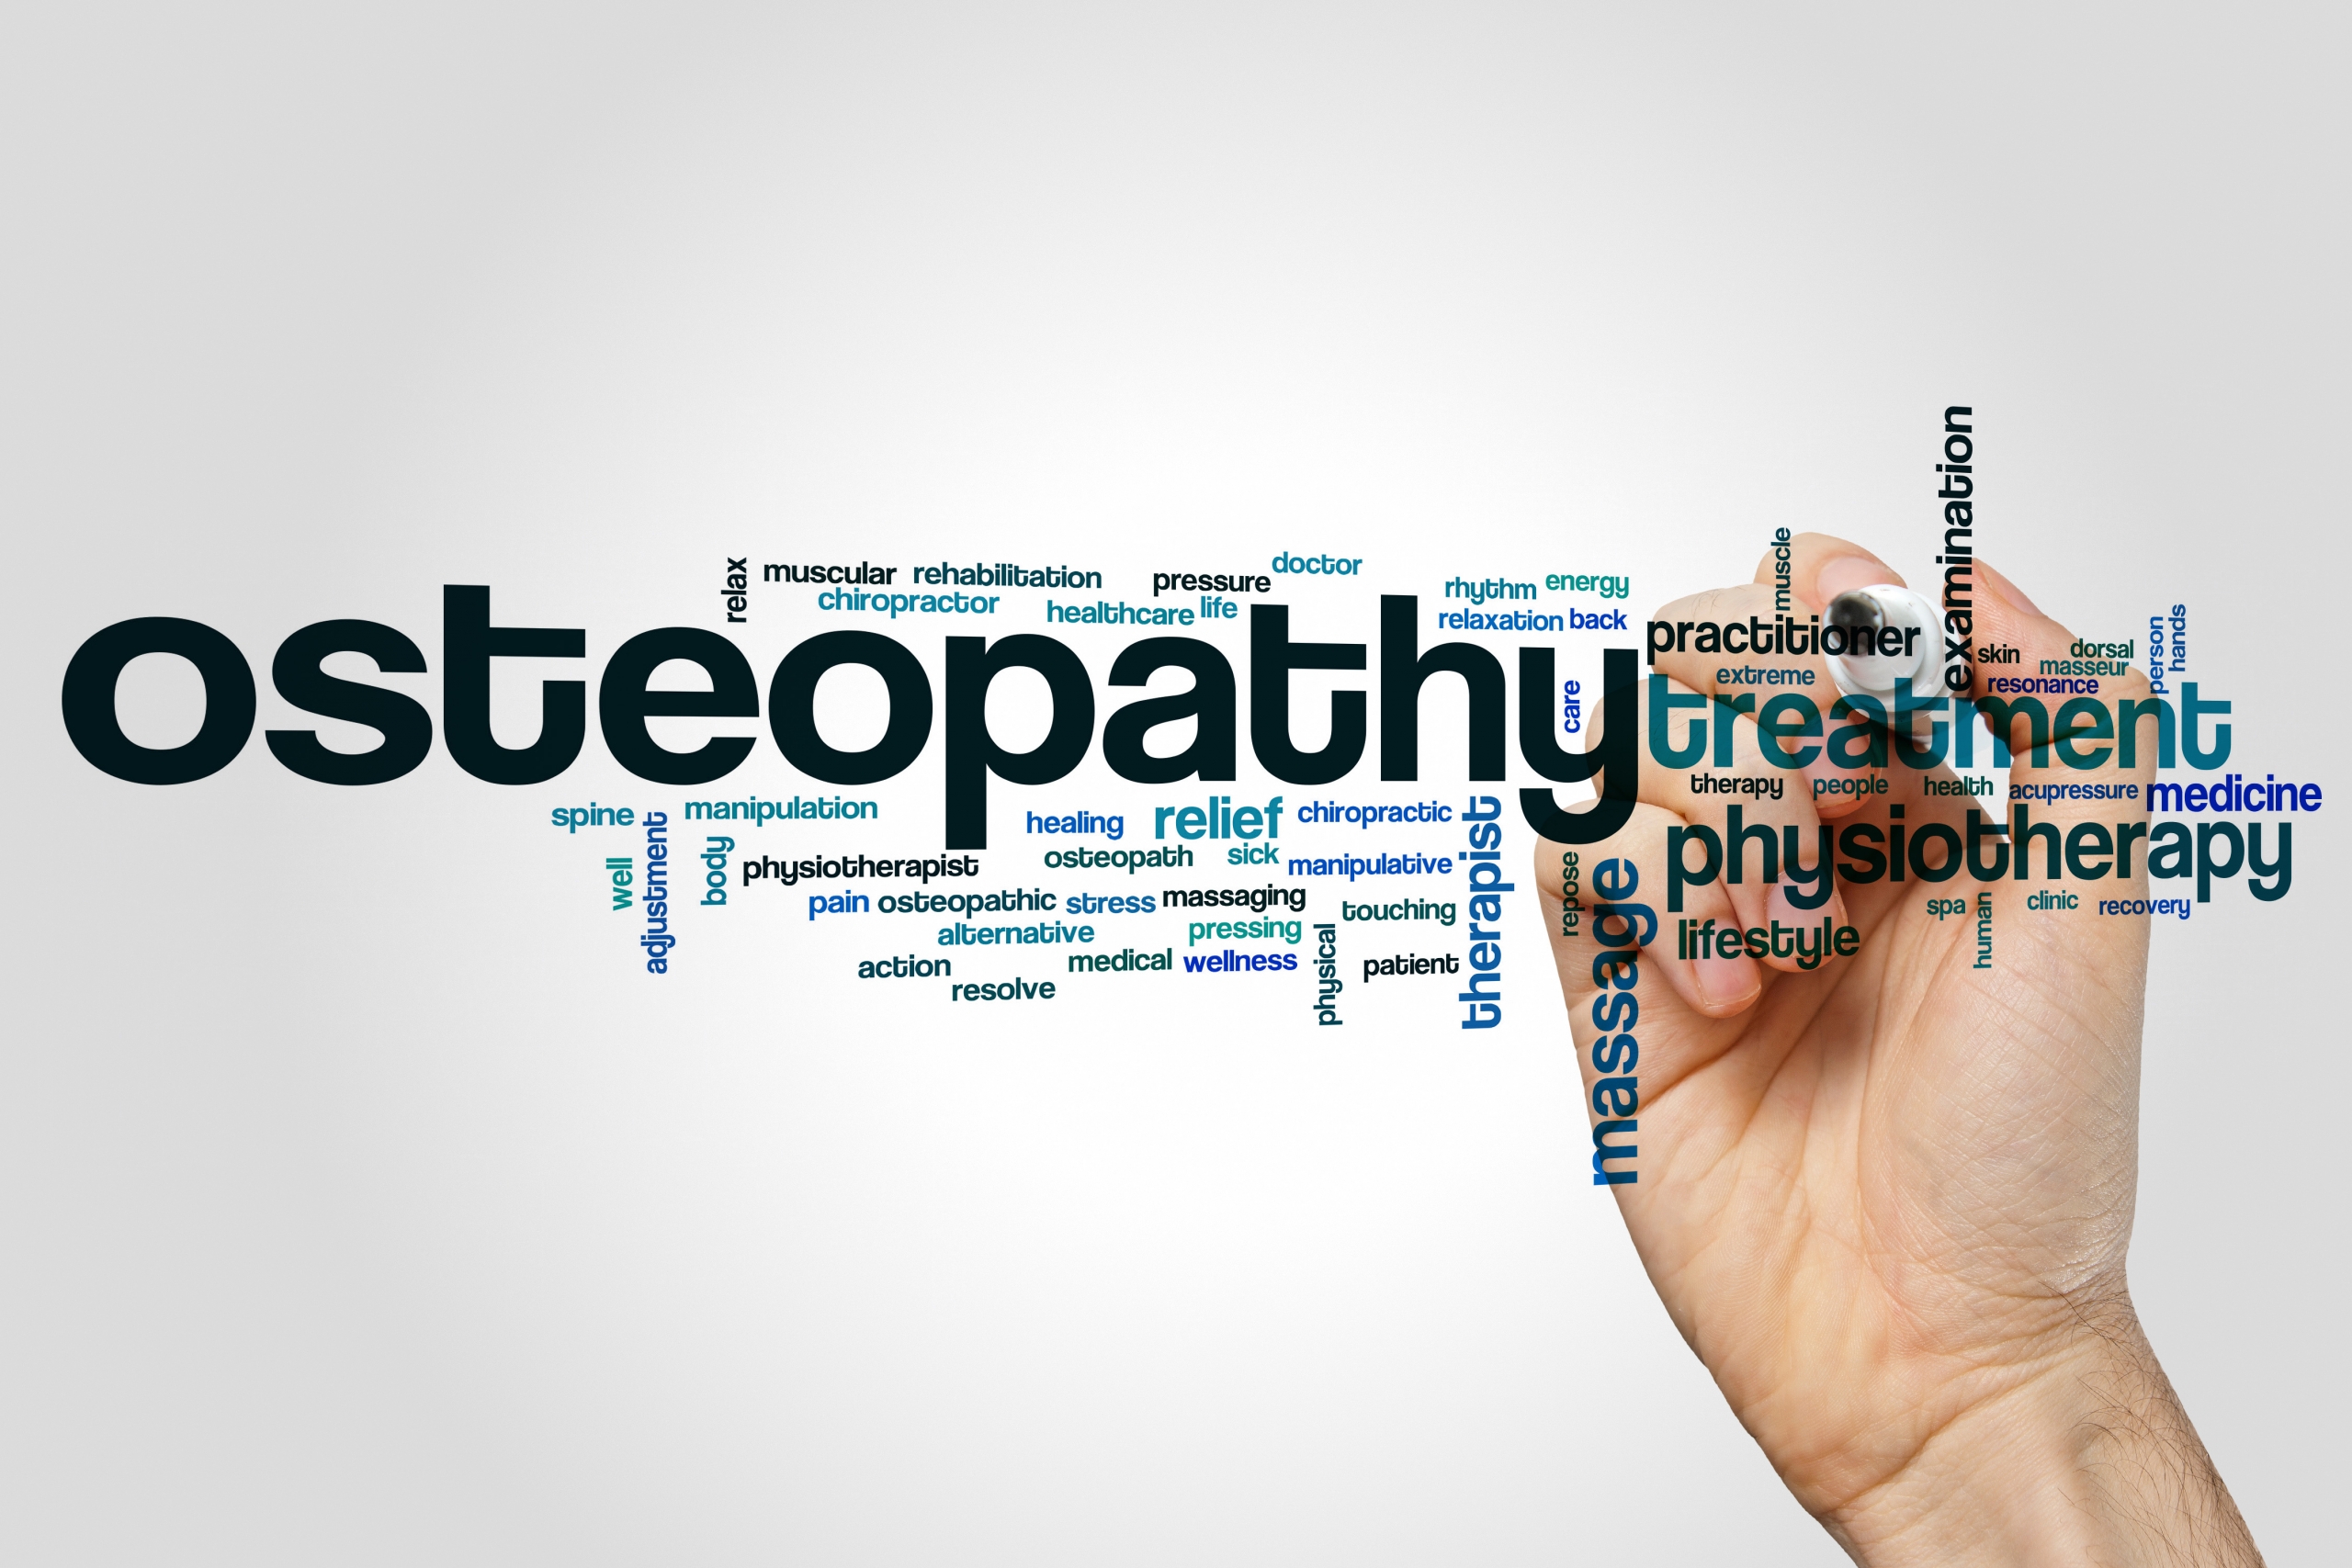 En este momento estás viendo Vocabulario básico de Osteopatía: 5 palabras clave de esta disciplina